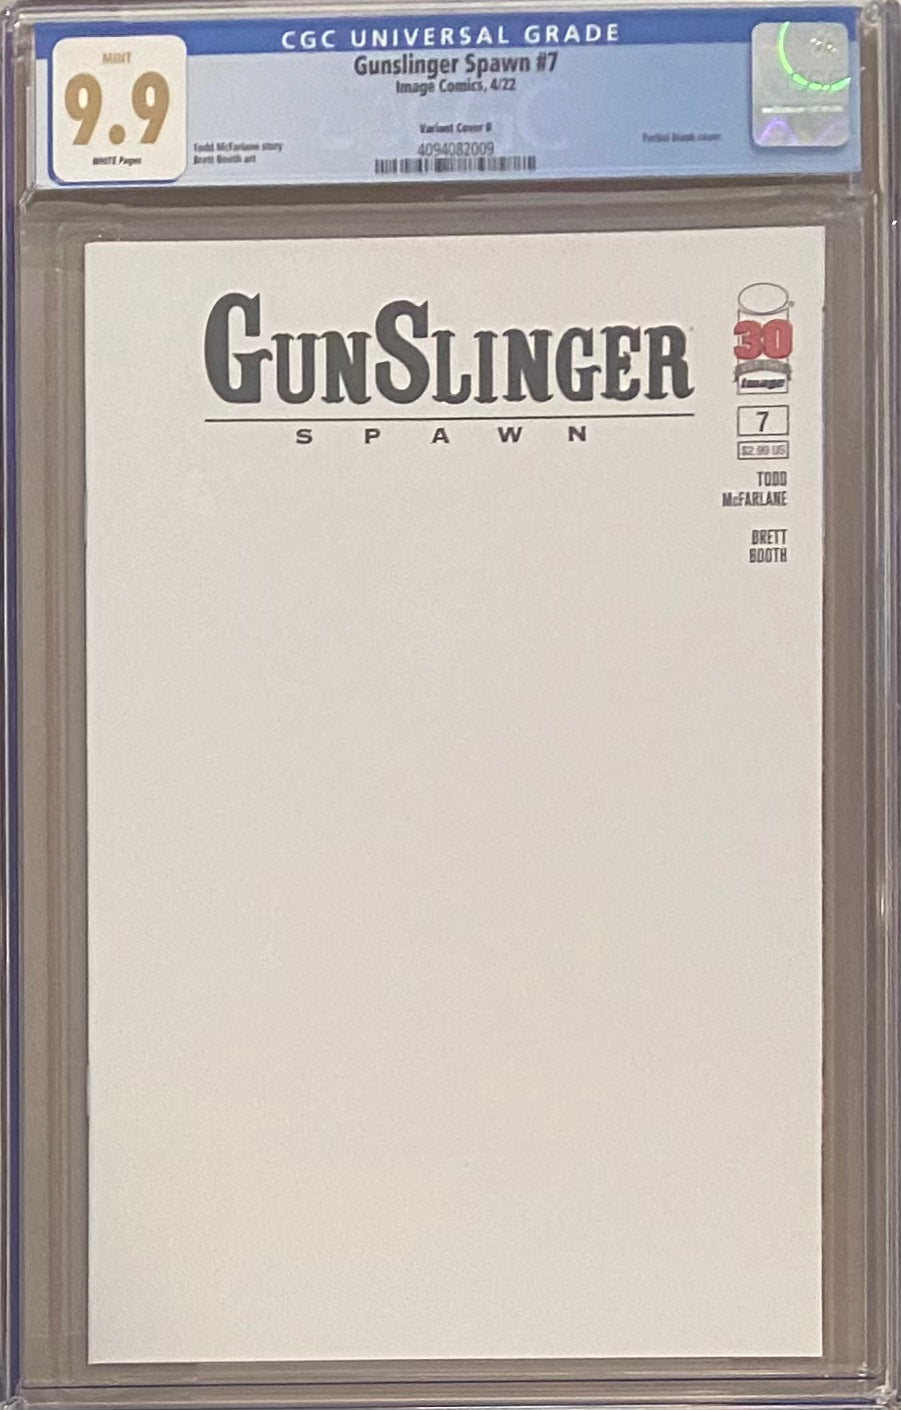 Gunslinger Spawn #7 Blank Sketch Variant CGC 9.9 MINT